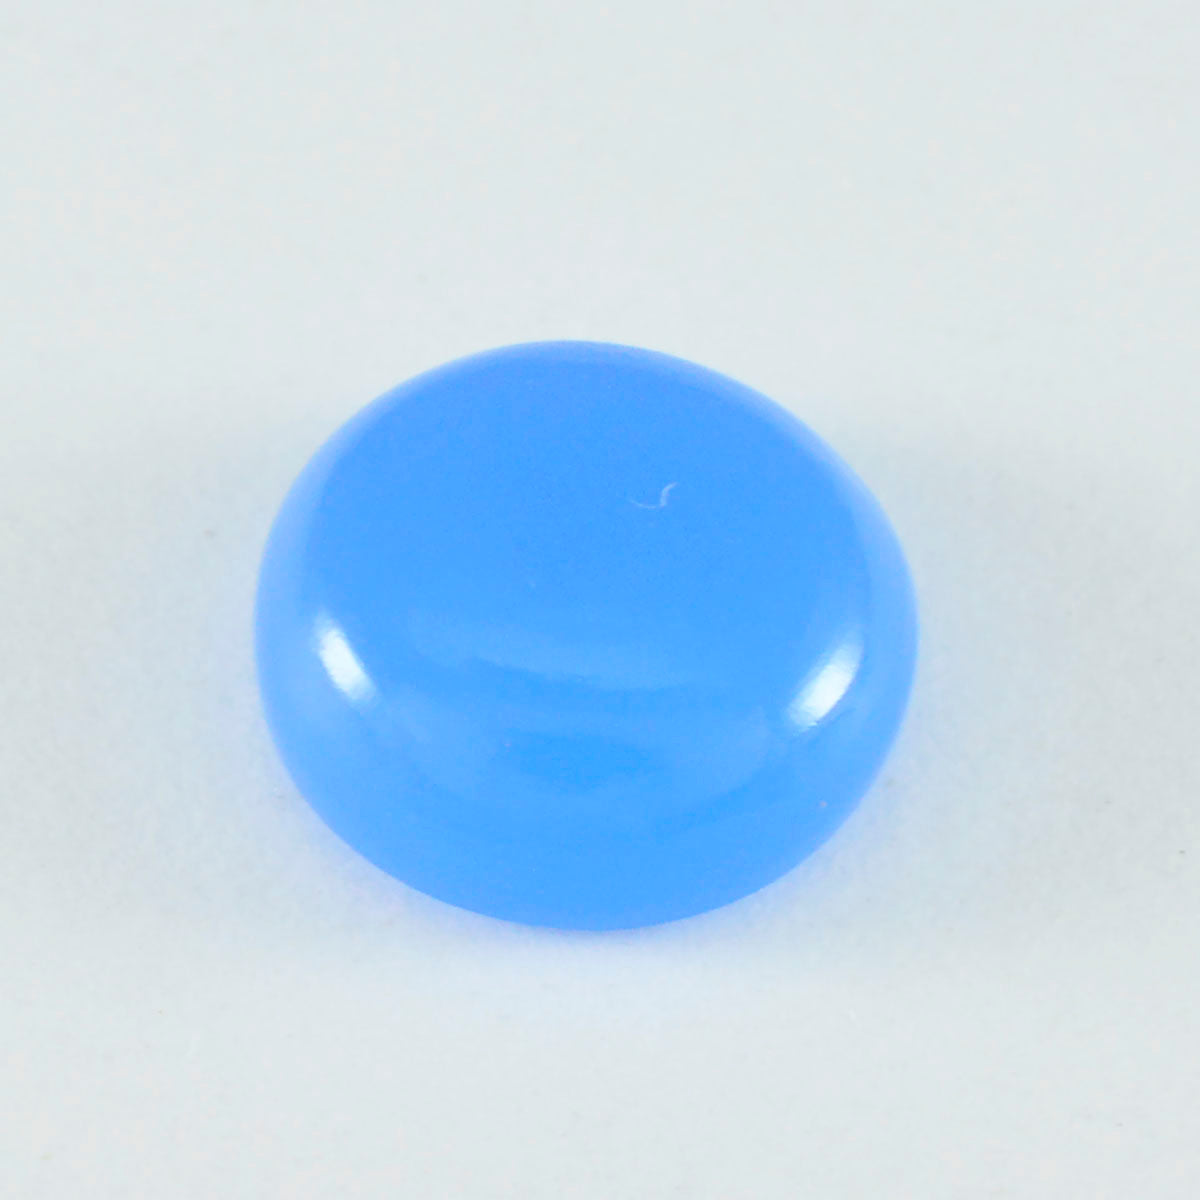 Riyogems 1PC Blue Chalcedony Cabochon 10x10 mm Round Shape pretty Quality Loose Gems